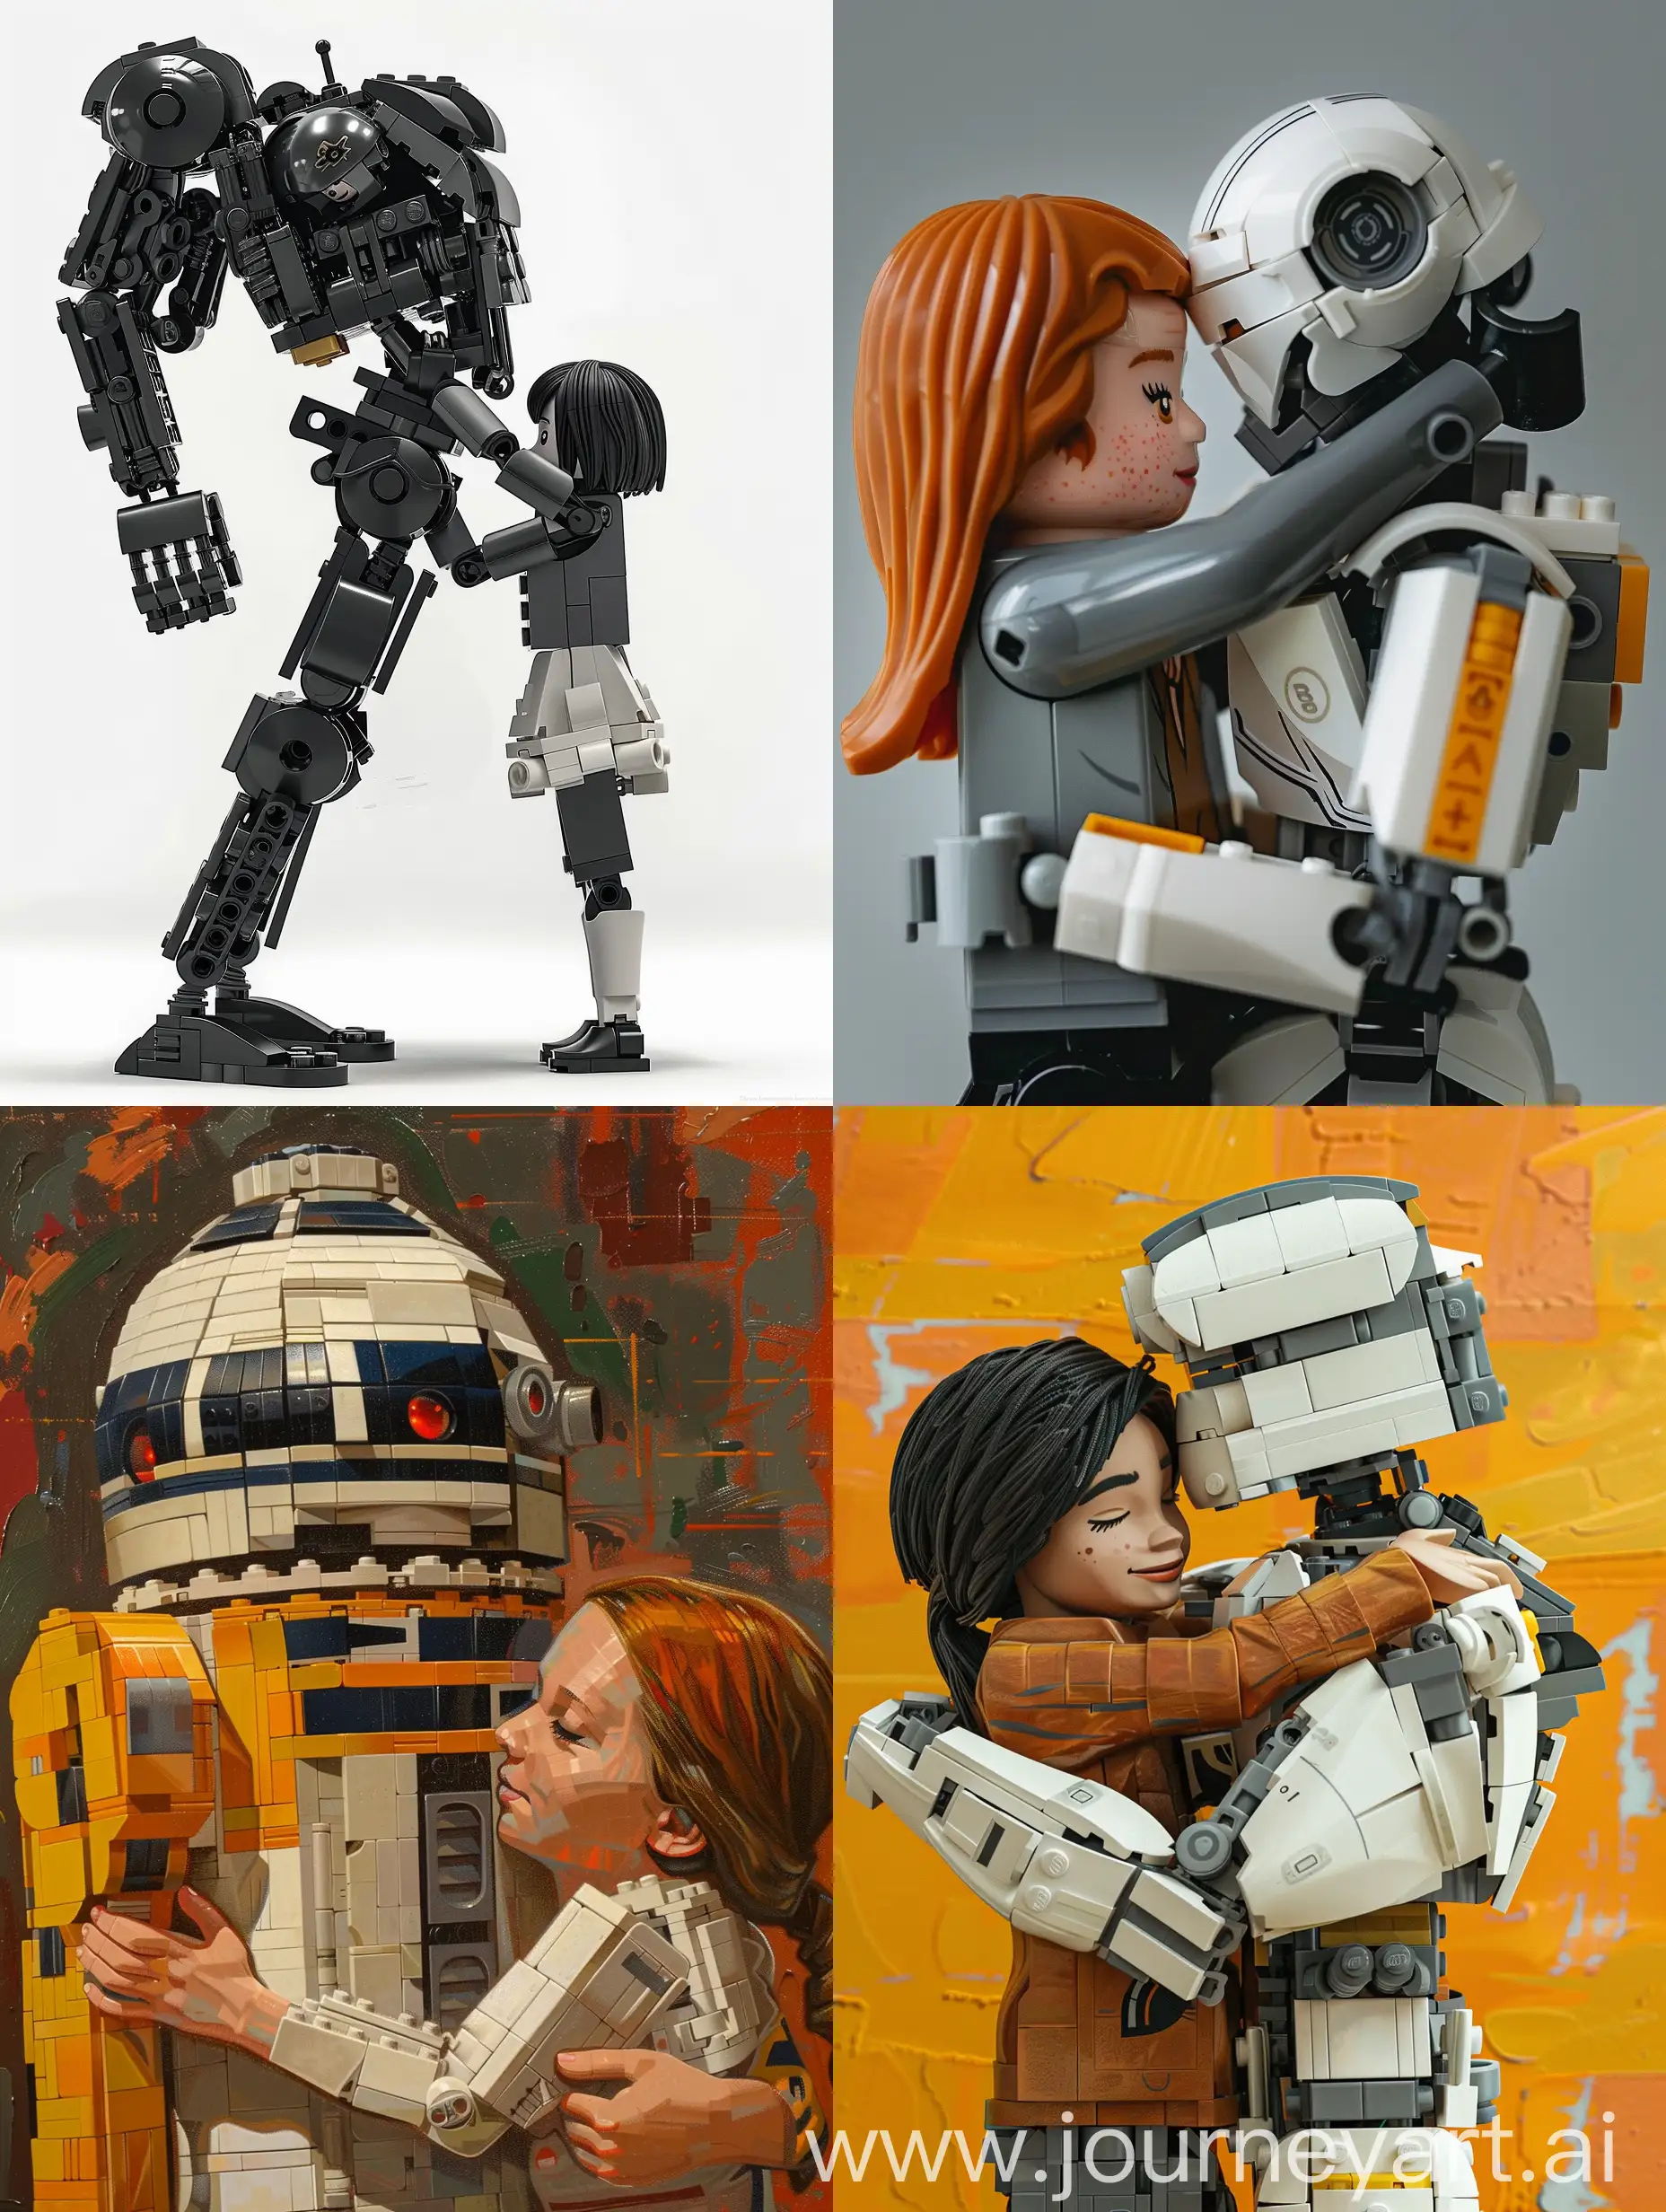 Girl-Embraces-Robot-in-LEGO-Scene